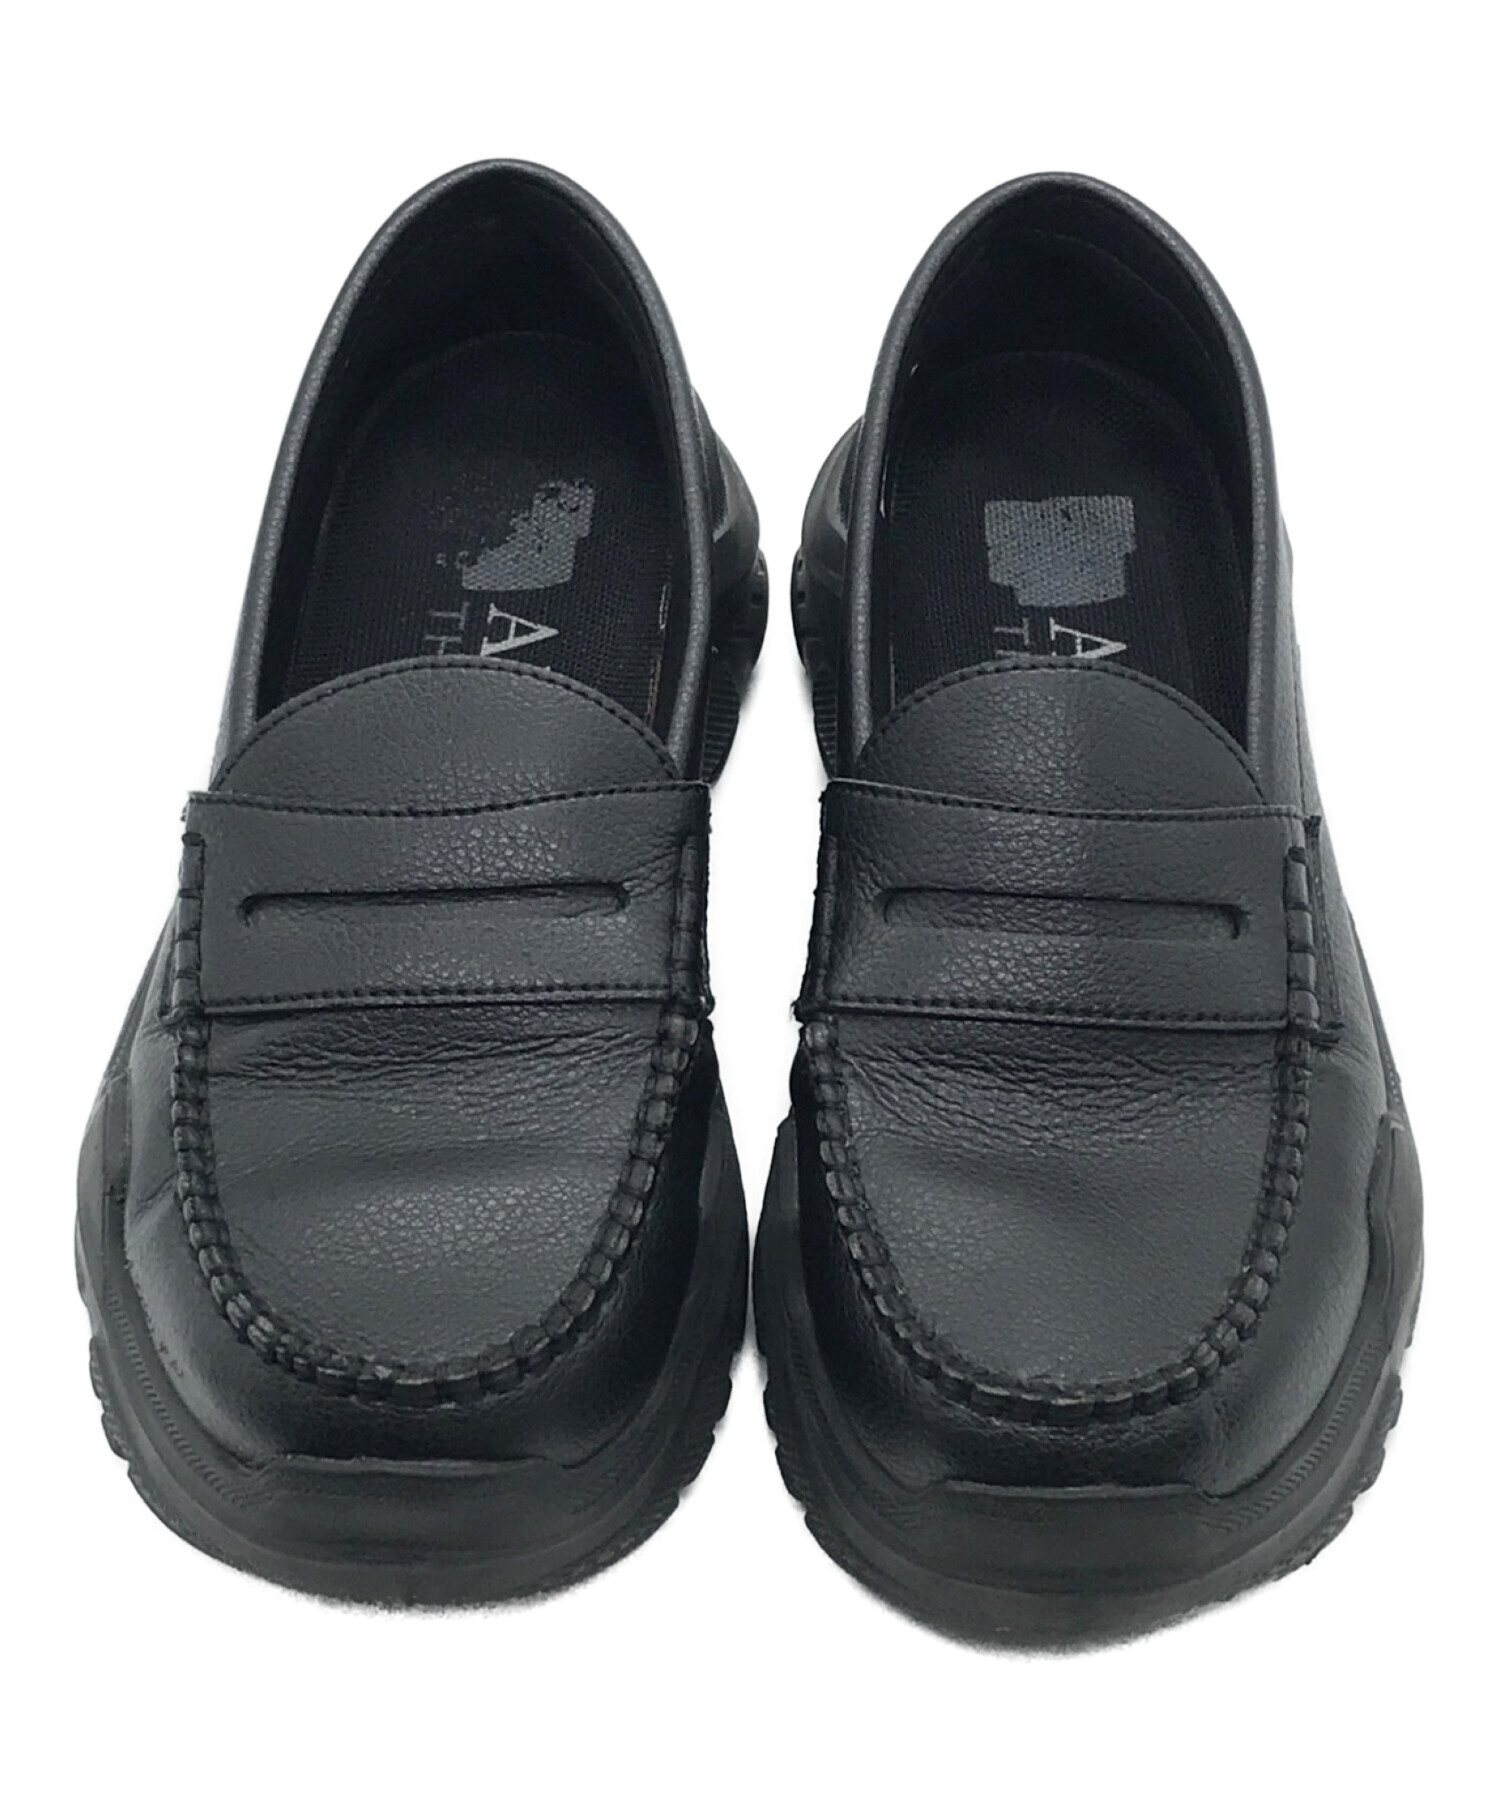 AKIKOAOKI ローファー BLACK×BLACK定価¥31900 - ローファー/革靴